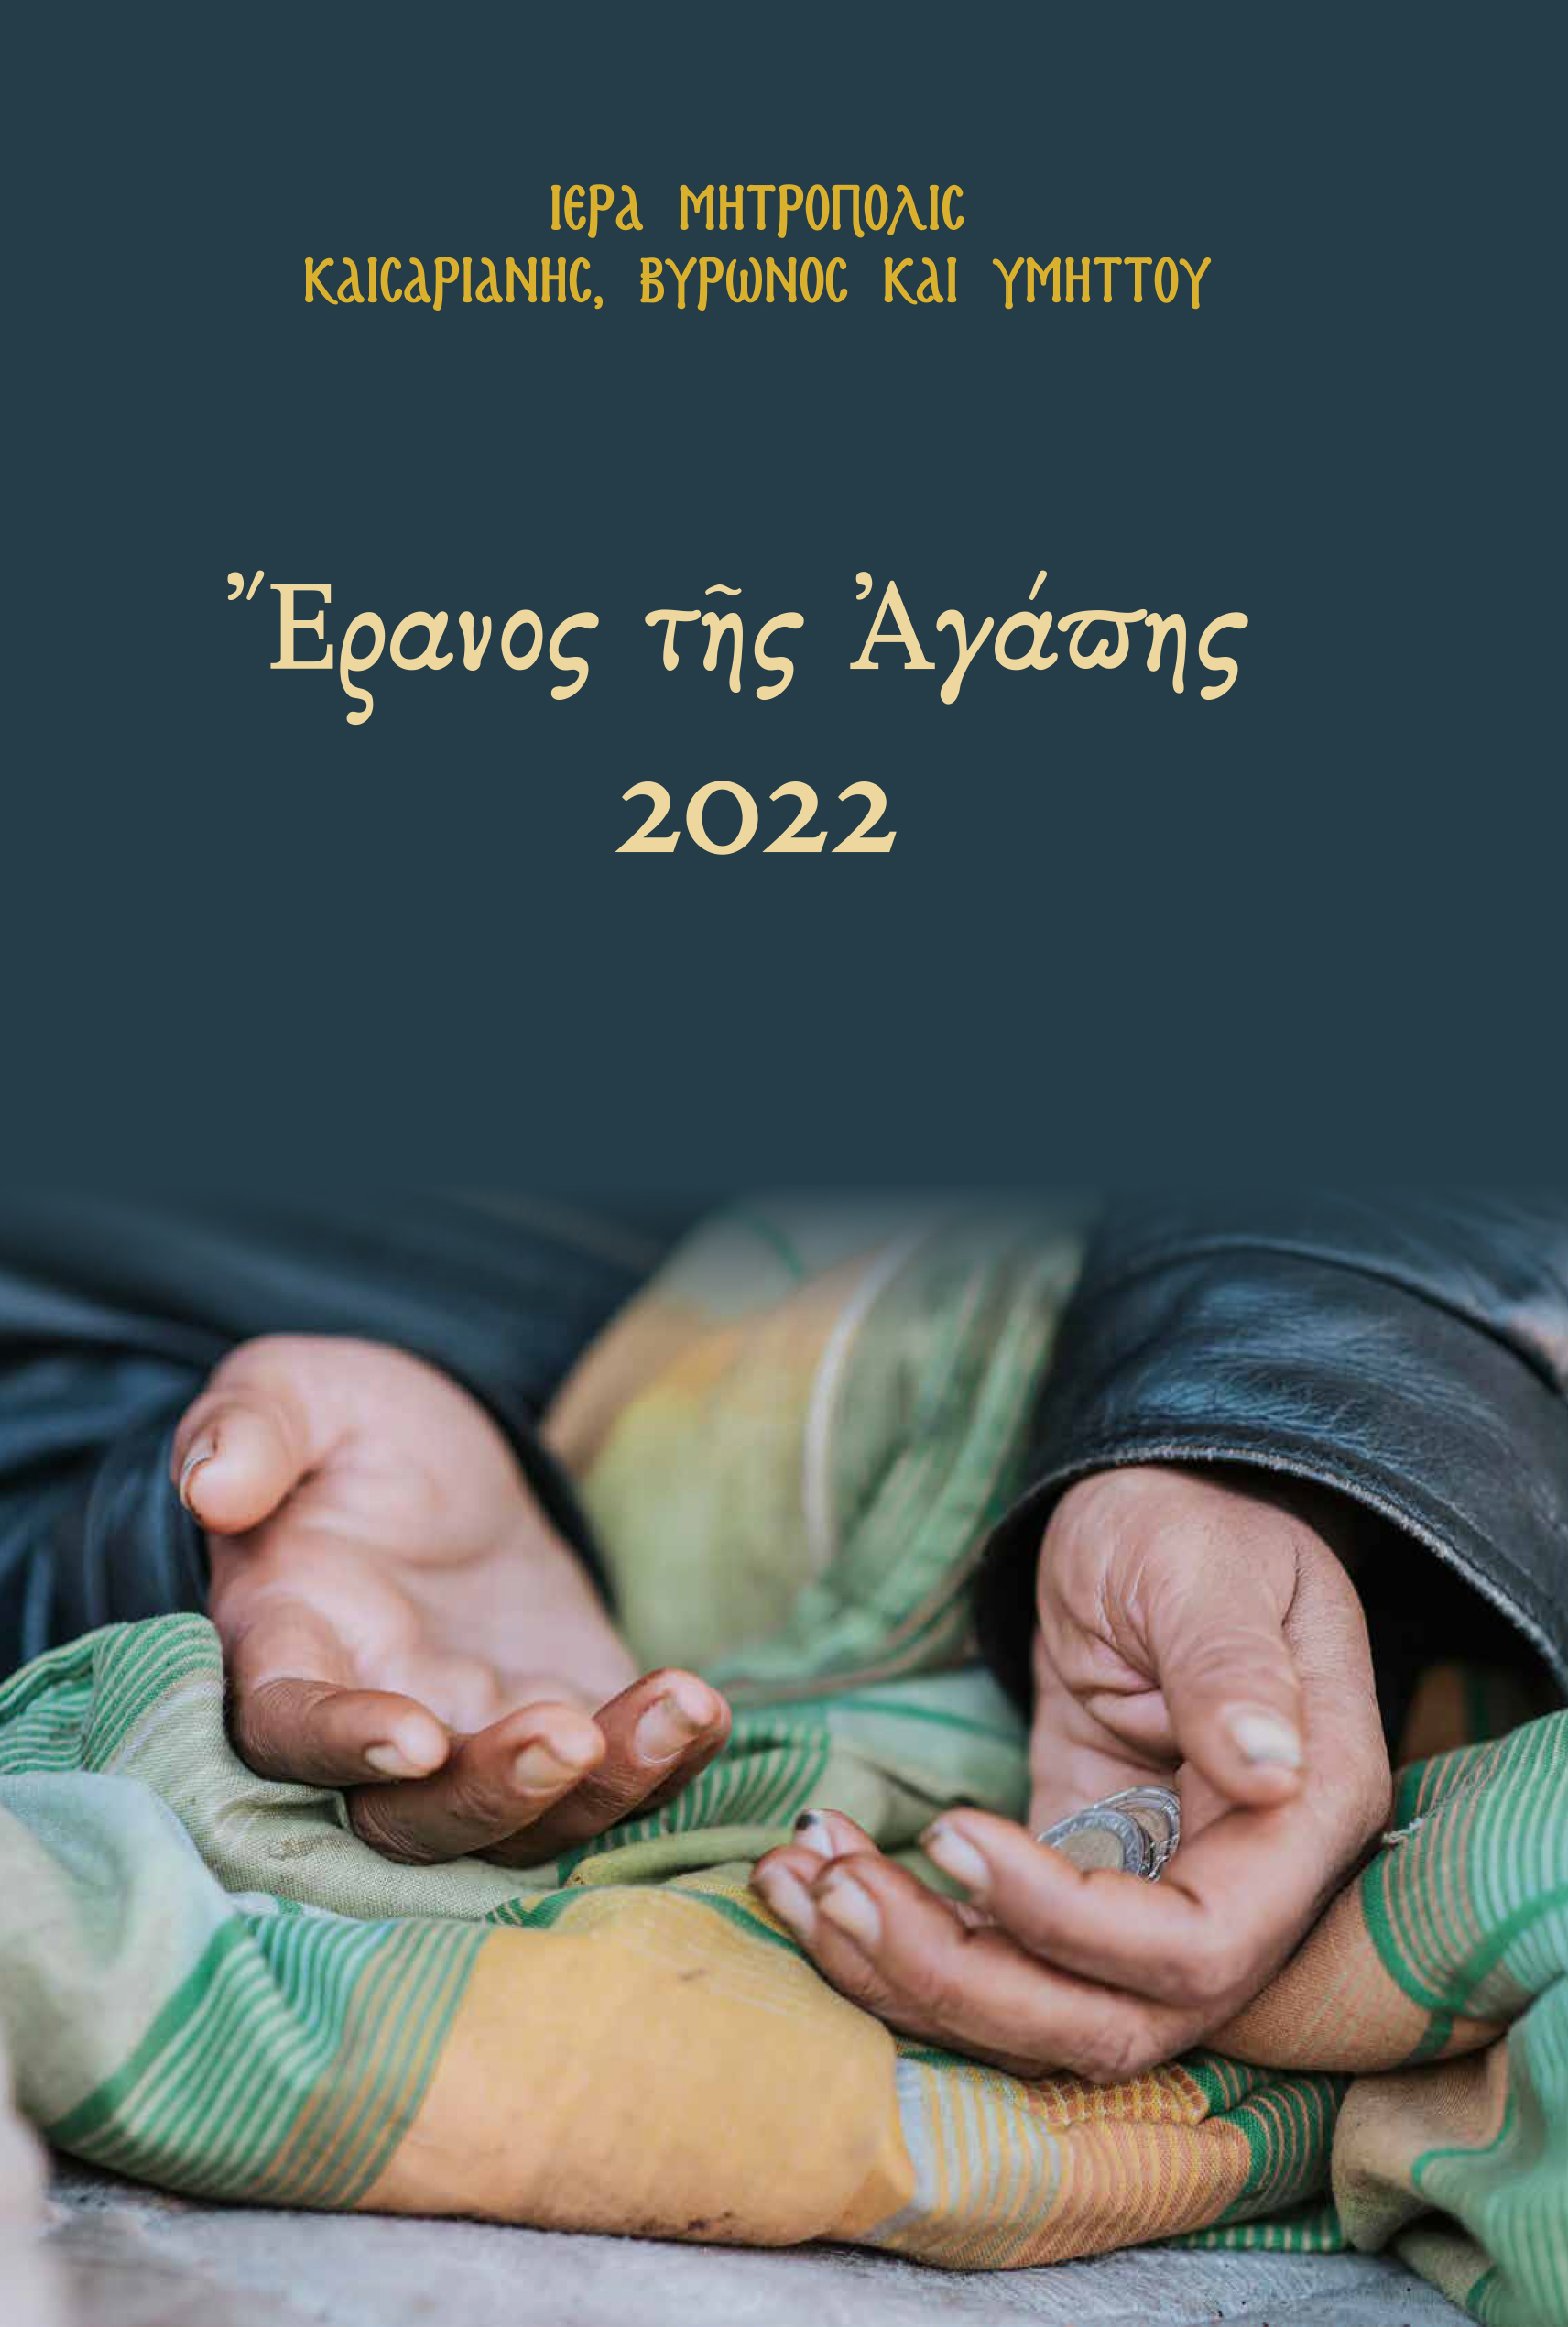 eranos agapis 2022 1